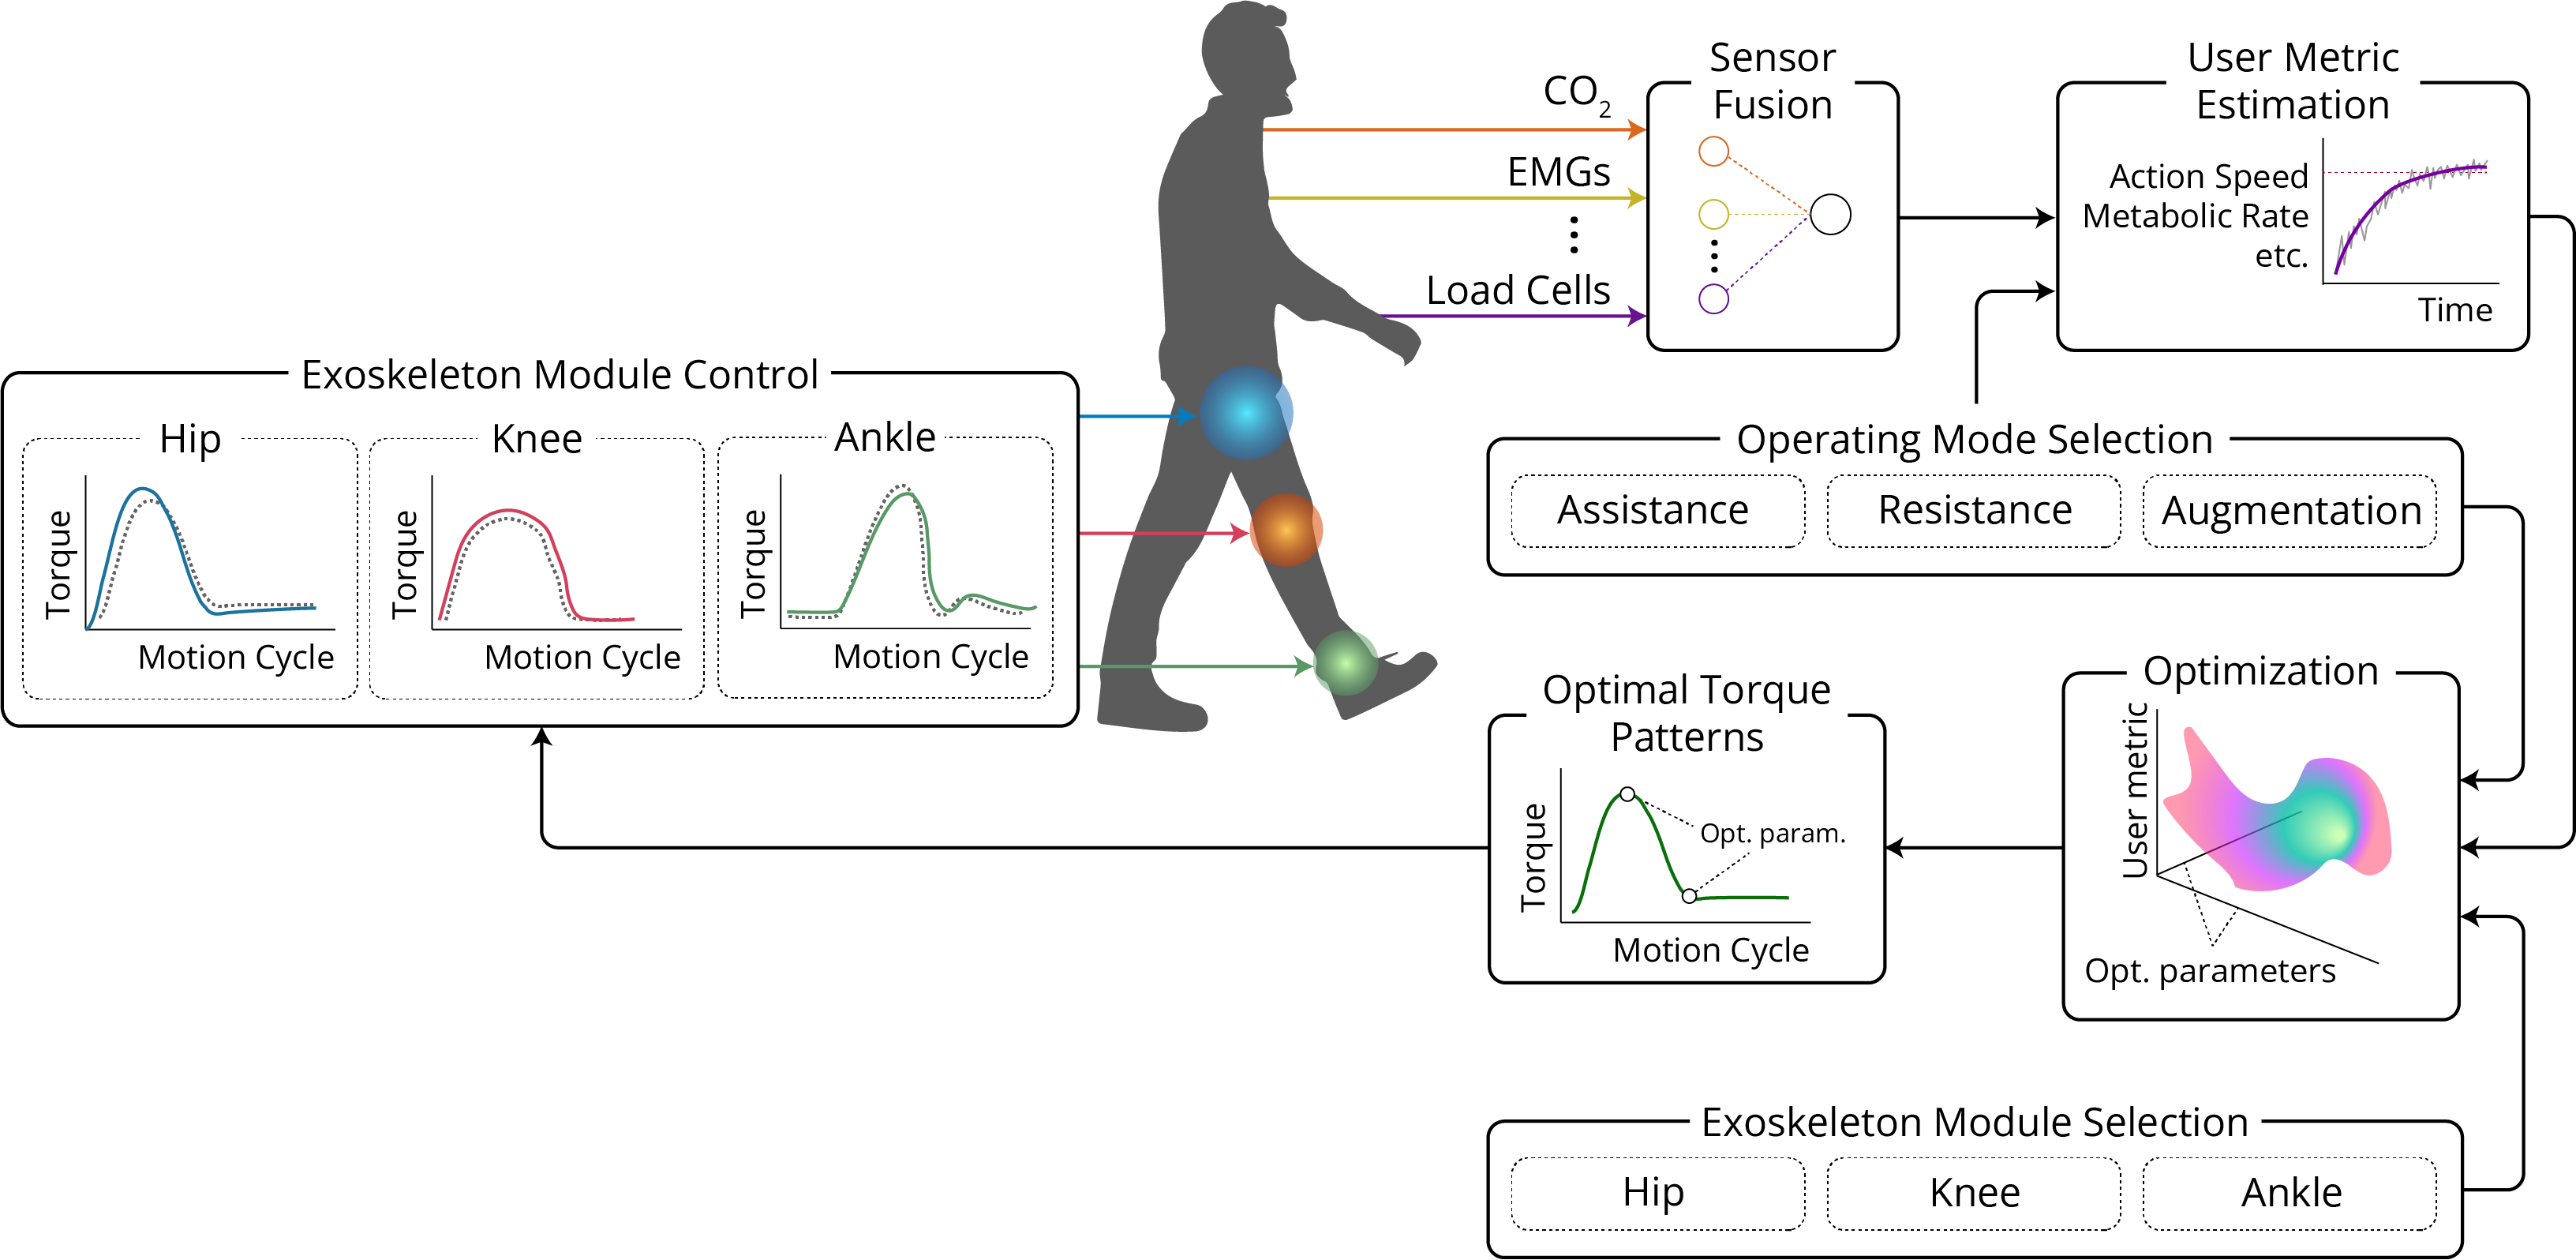 Exoskelettkontrol i realtid för "human-in-the-loop" optimering